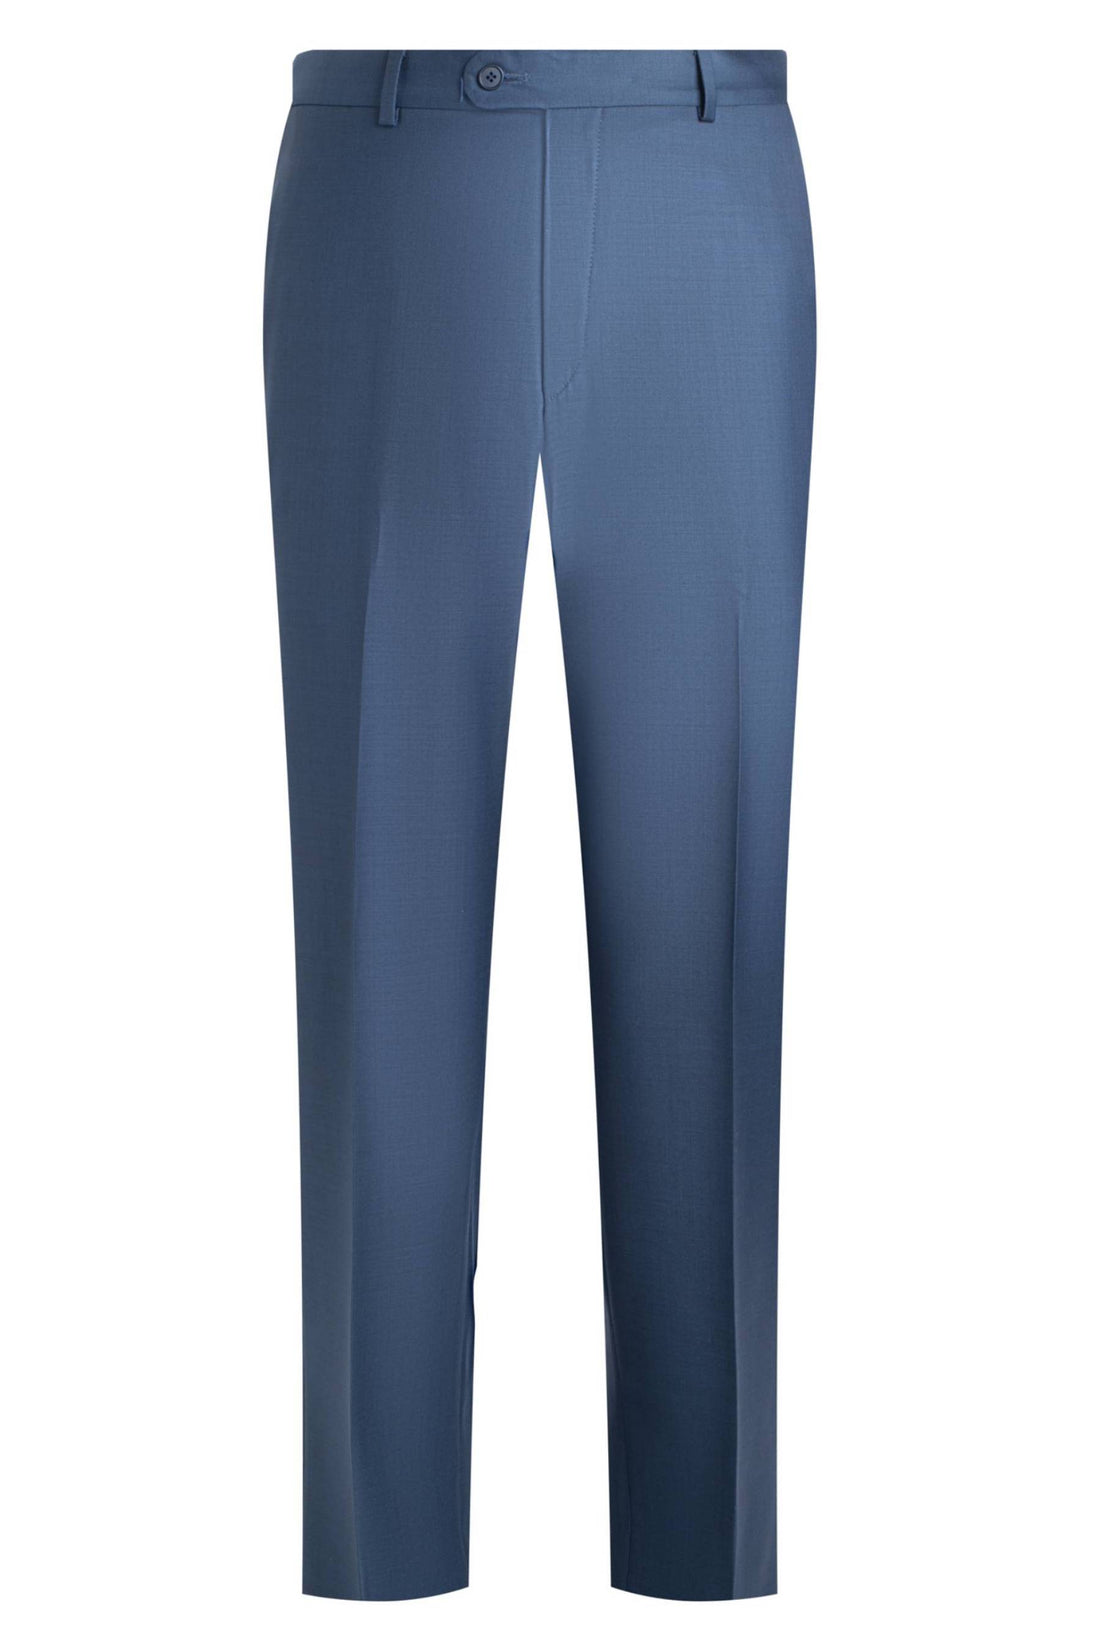 Heritage Gold Blue 110's Sharkskin Suit Front Pant